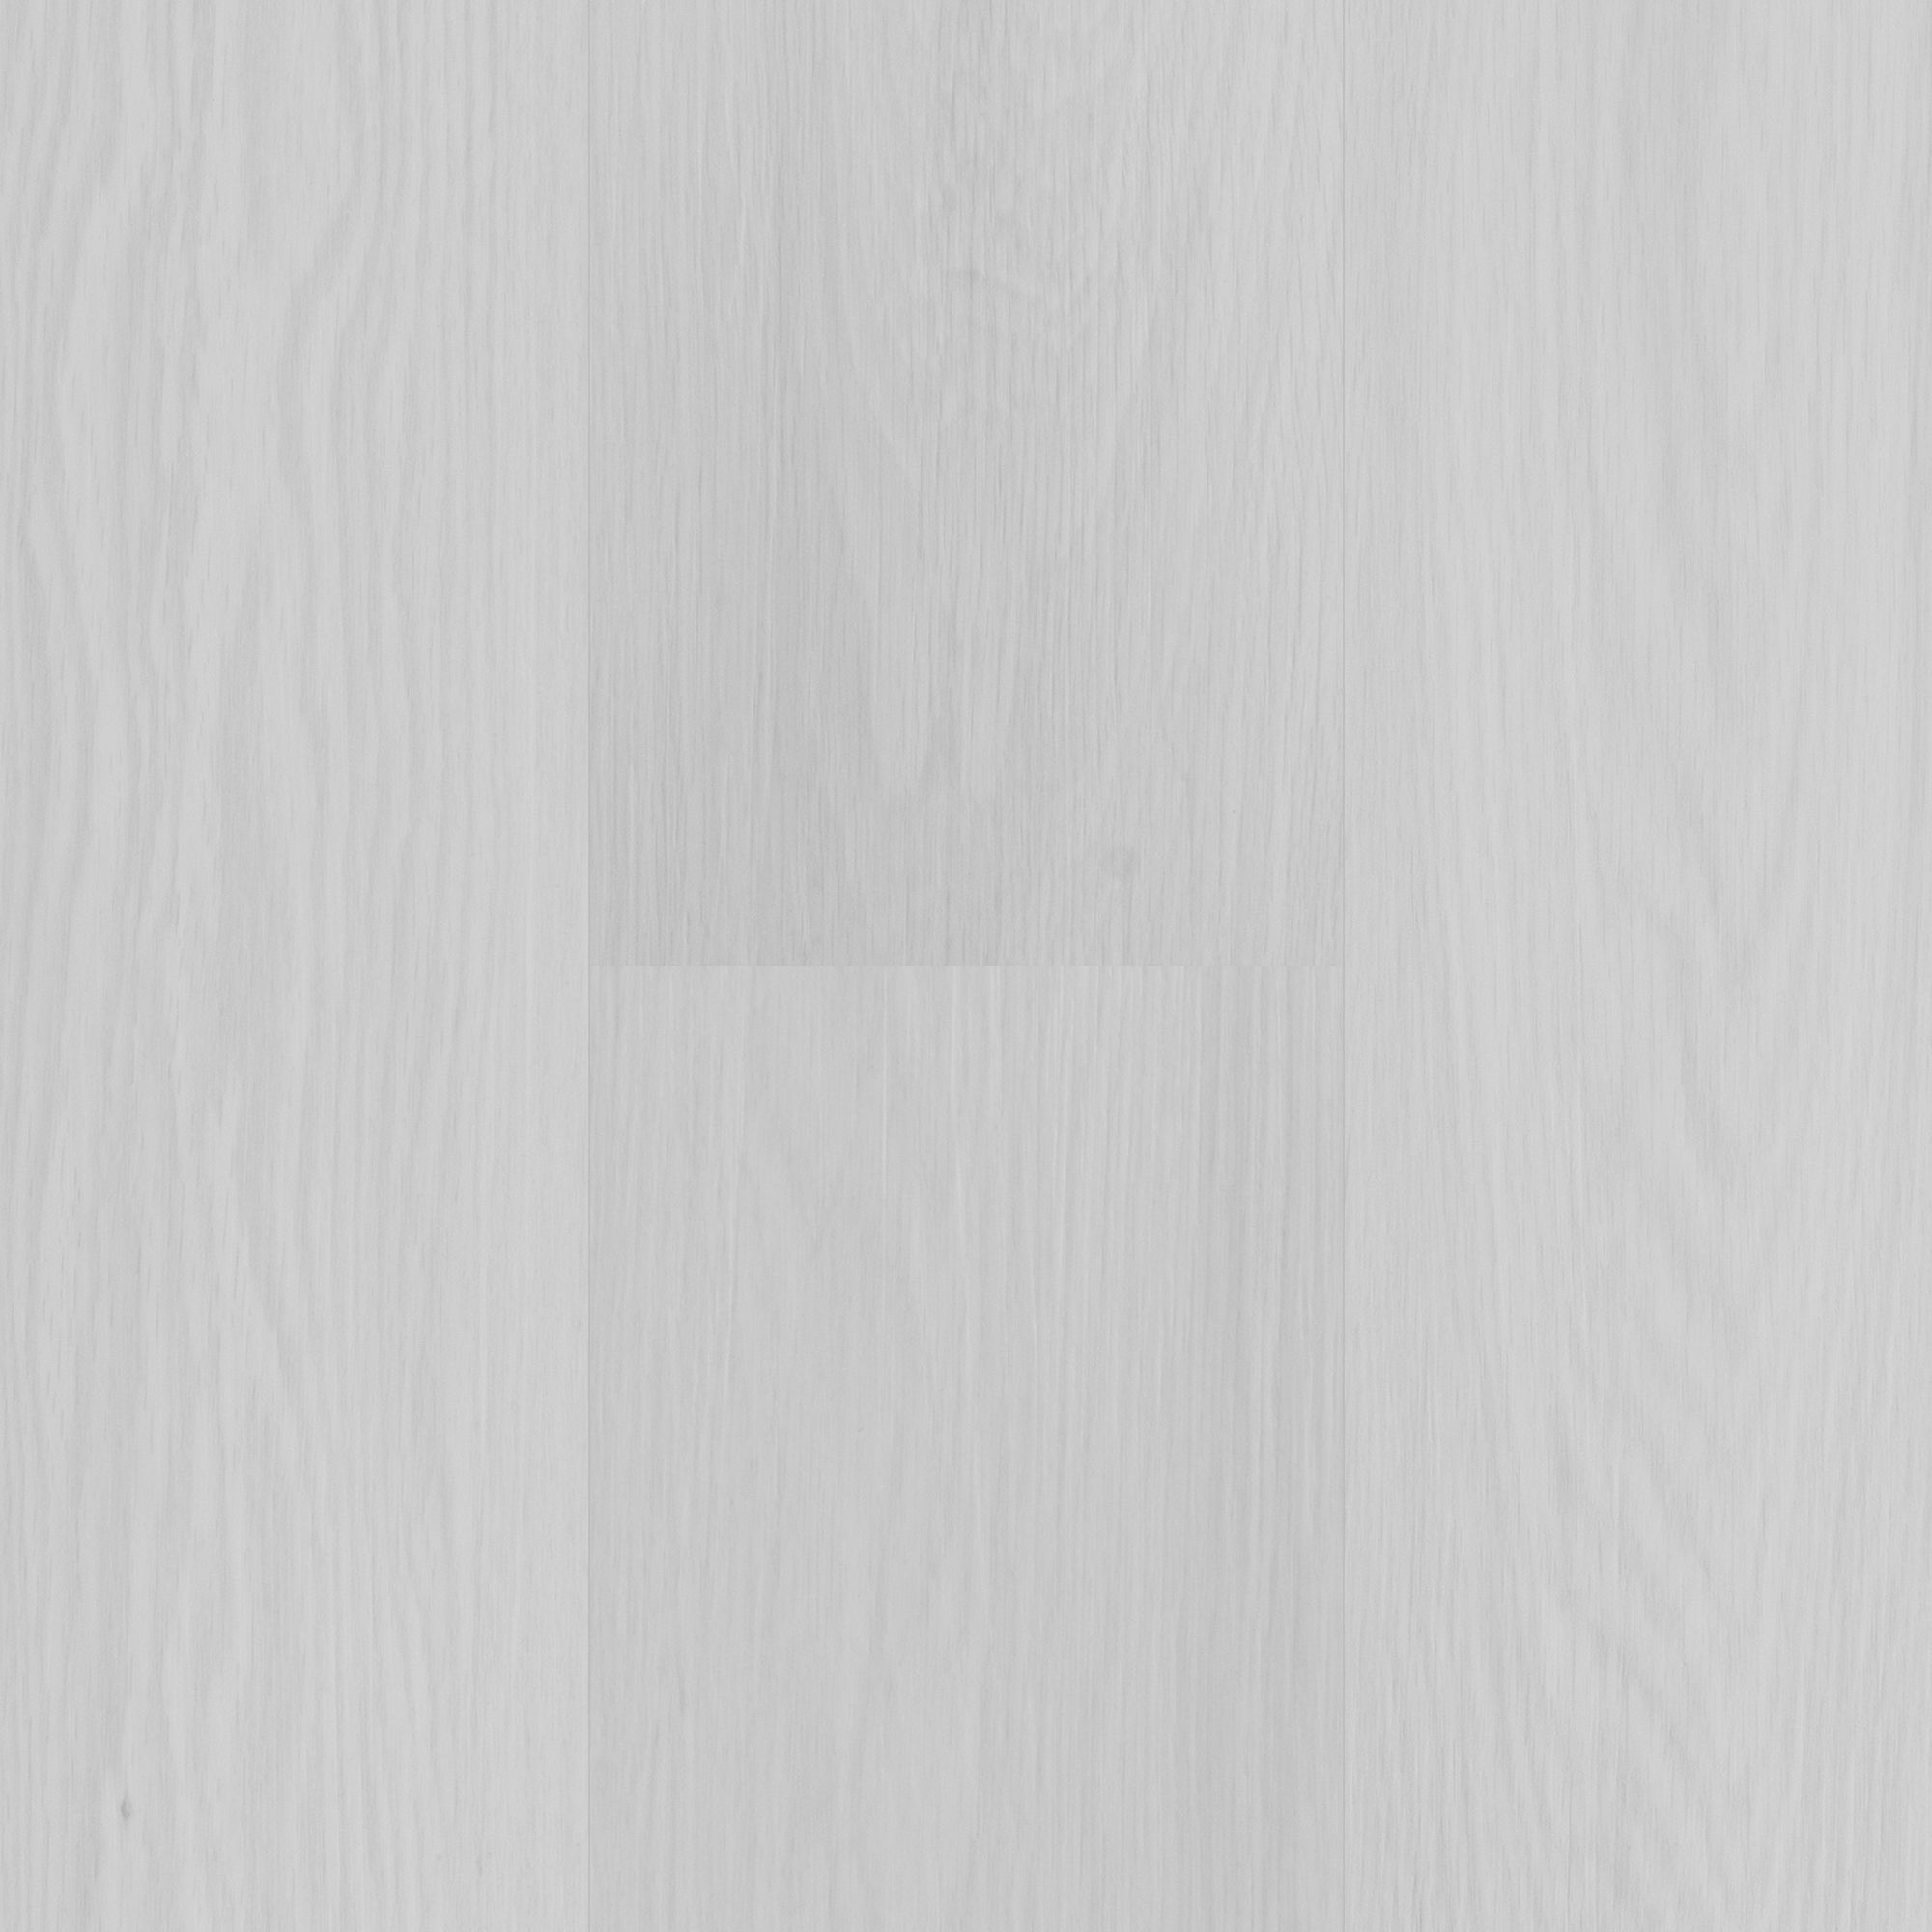 Кварц-виниловый ламинат Van Kleeck Floor Питерс VKF-028 виниловый ламинат clix floor